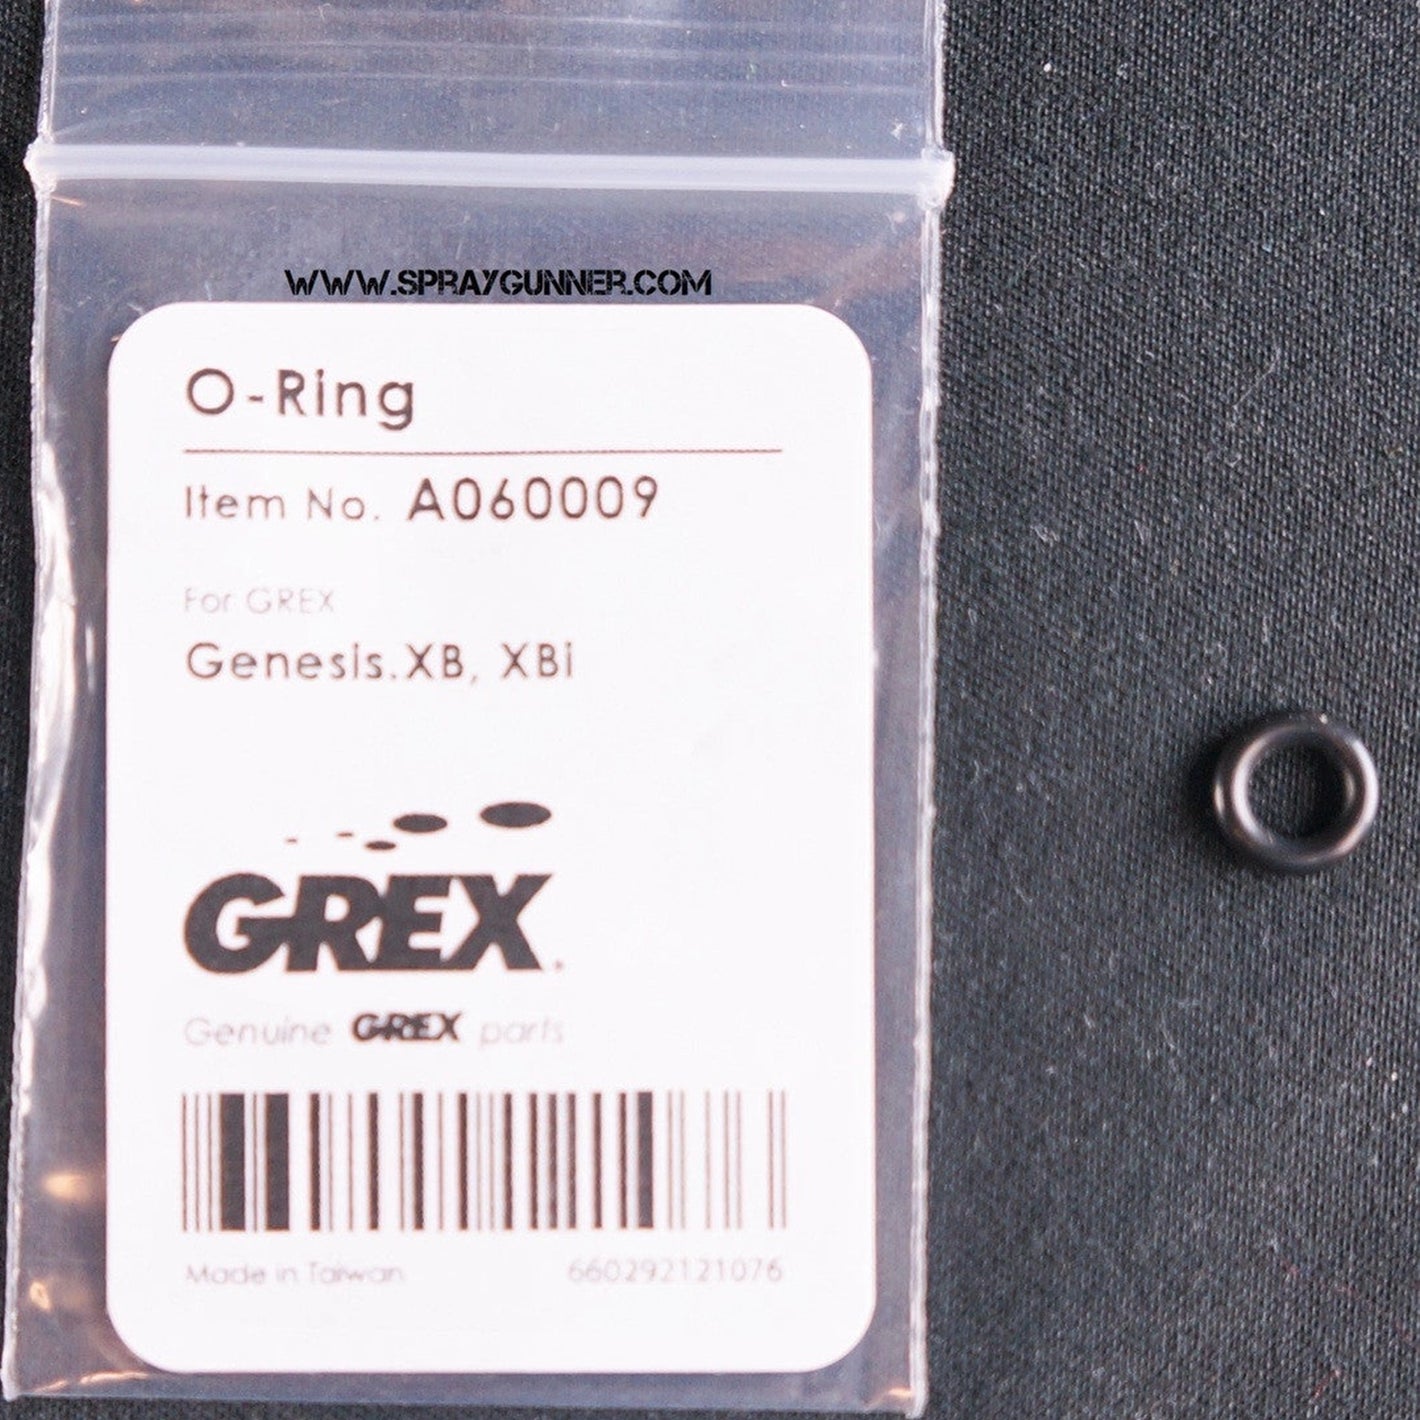 Grex O-Ring (A060009)